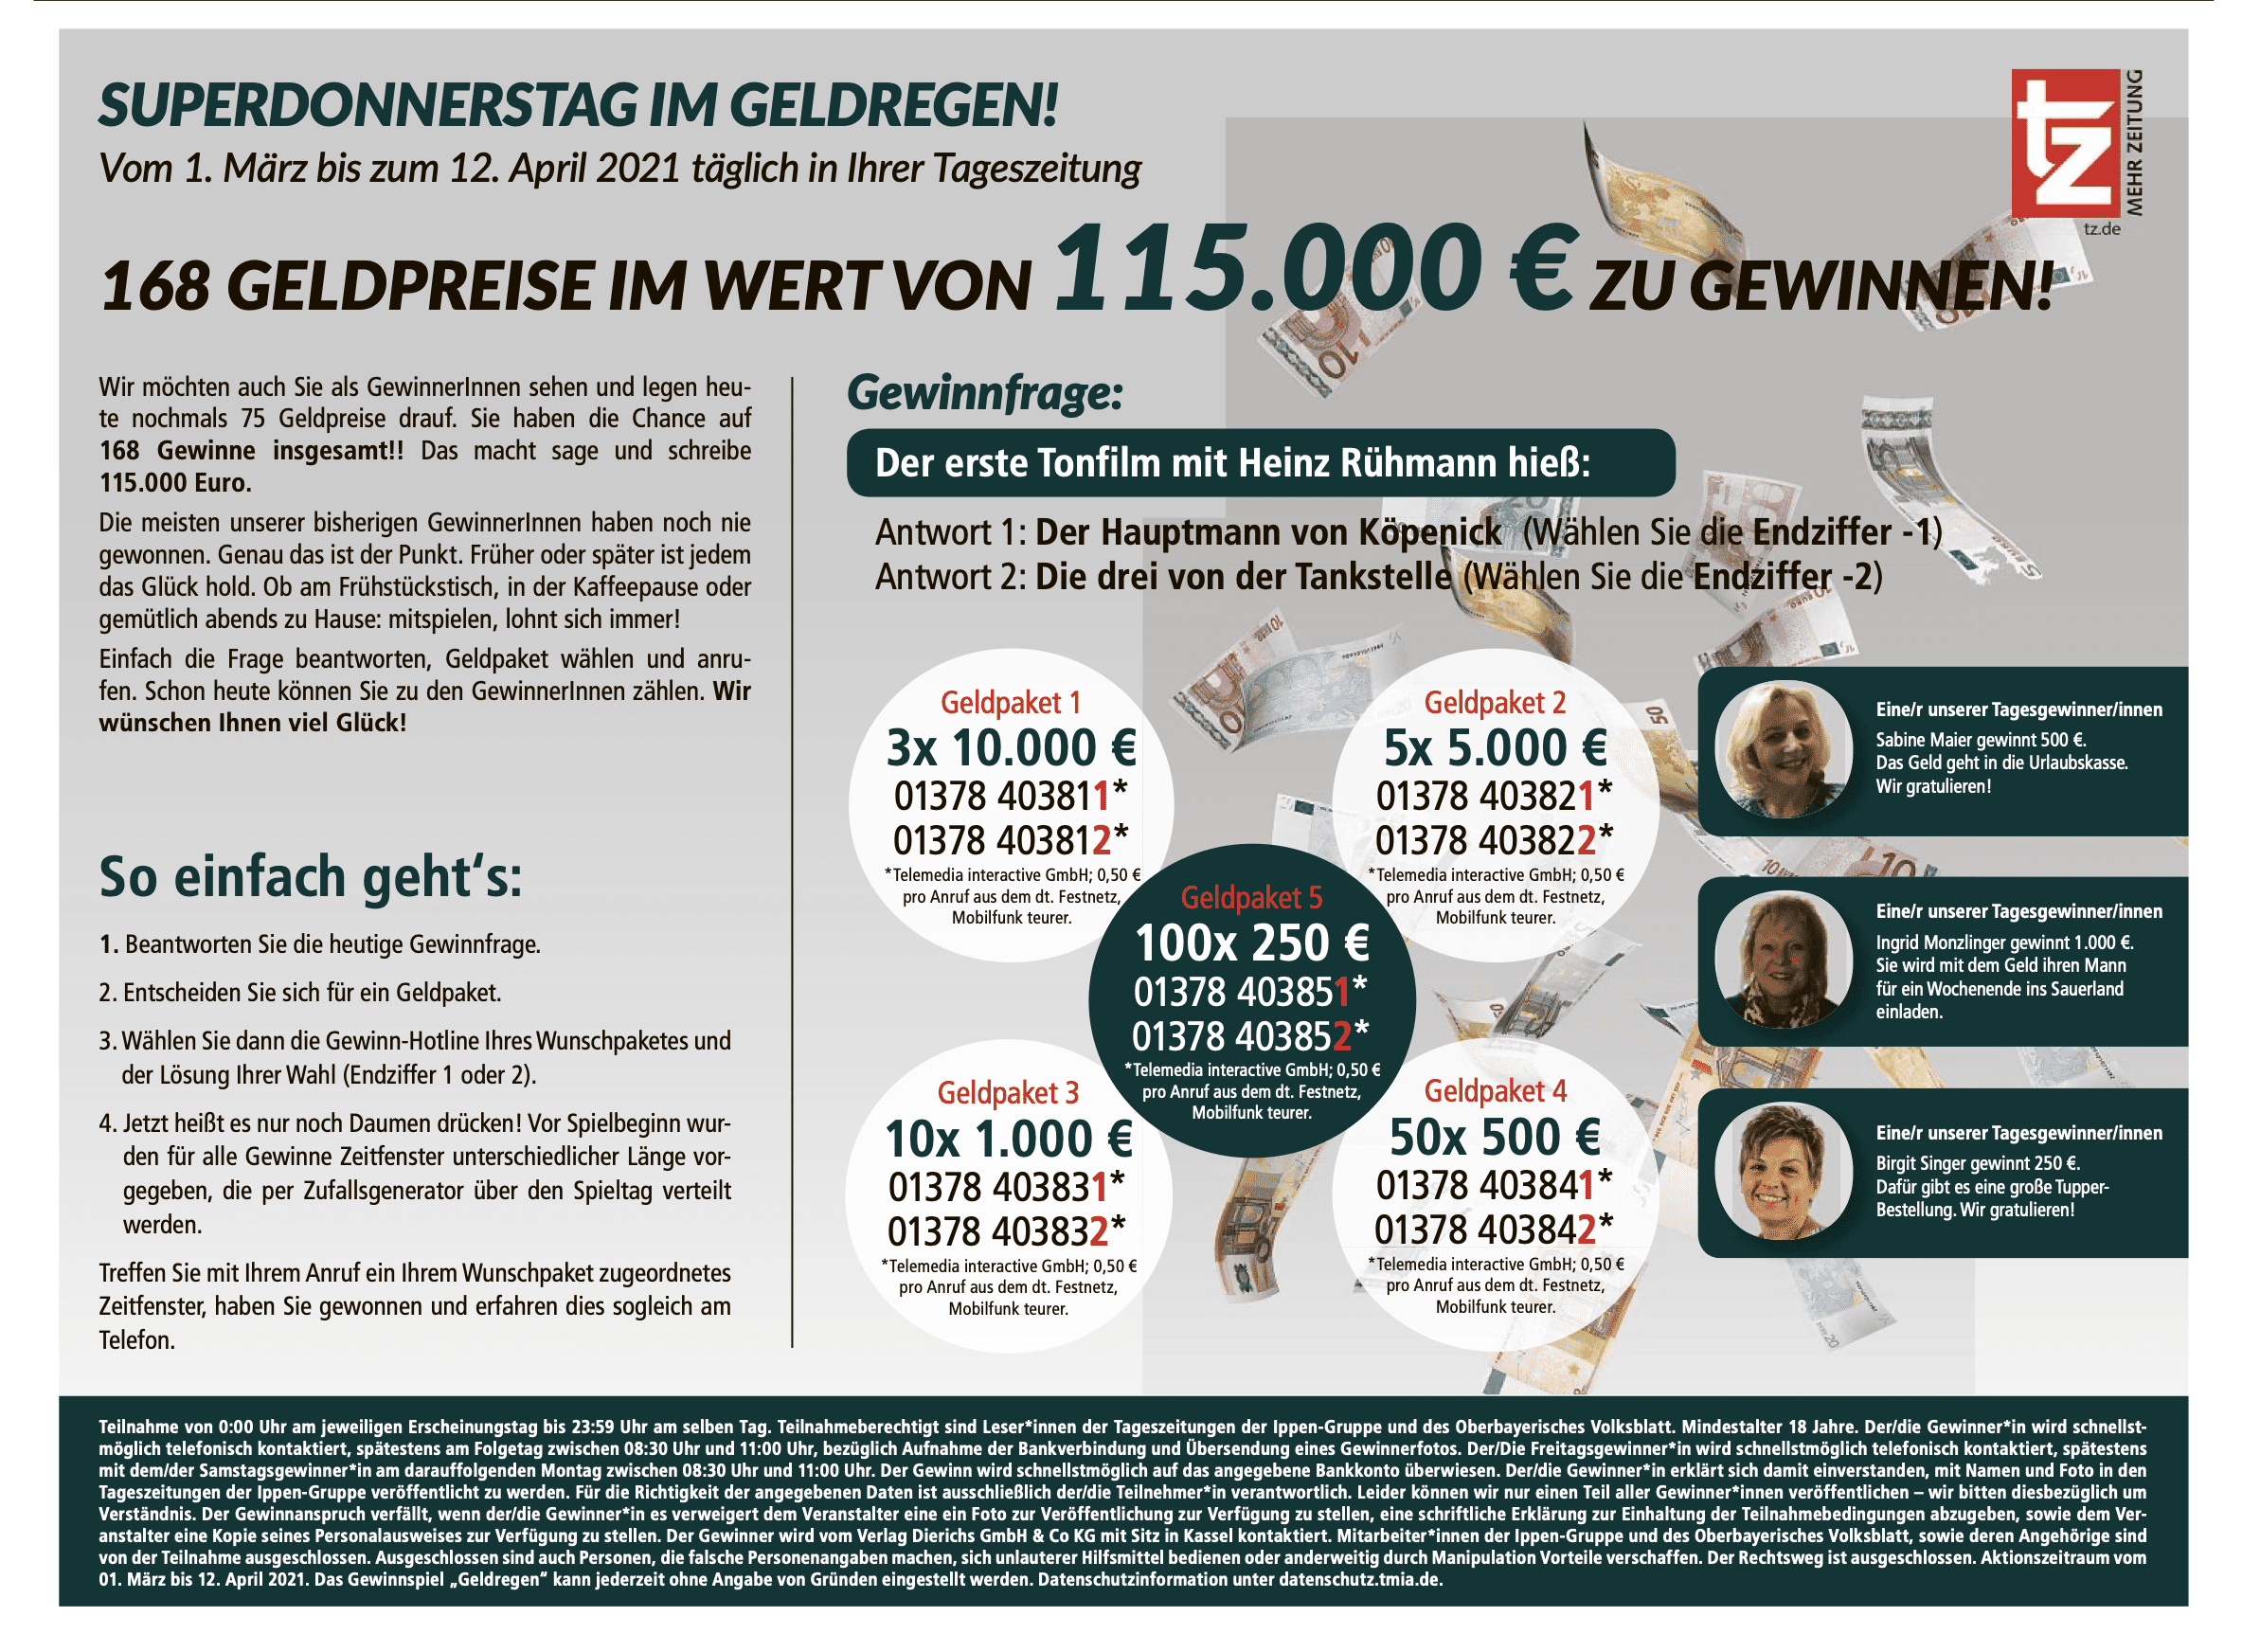 case_"Geldregen 2021“ Call-In-Gewinnspiel_ippen-gruppe